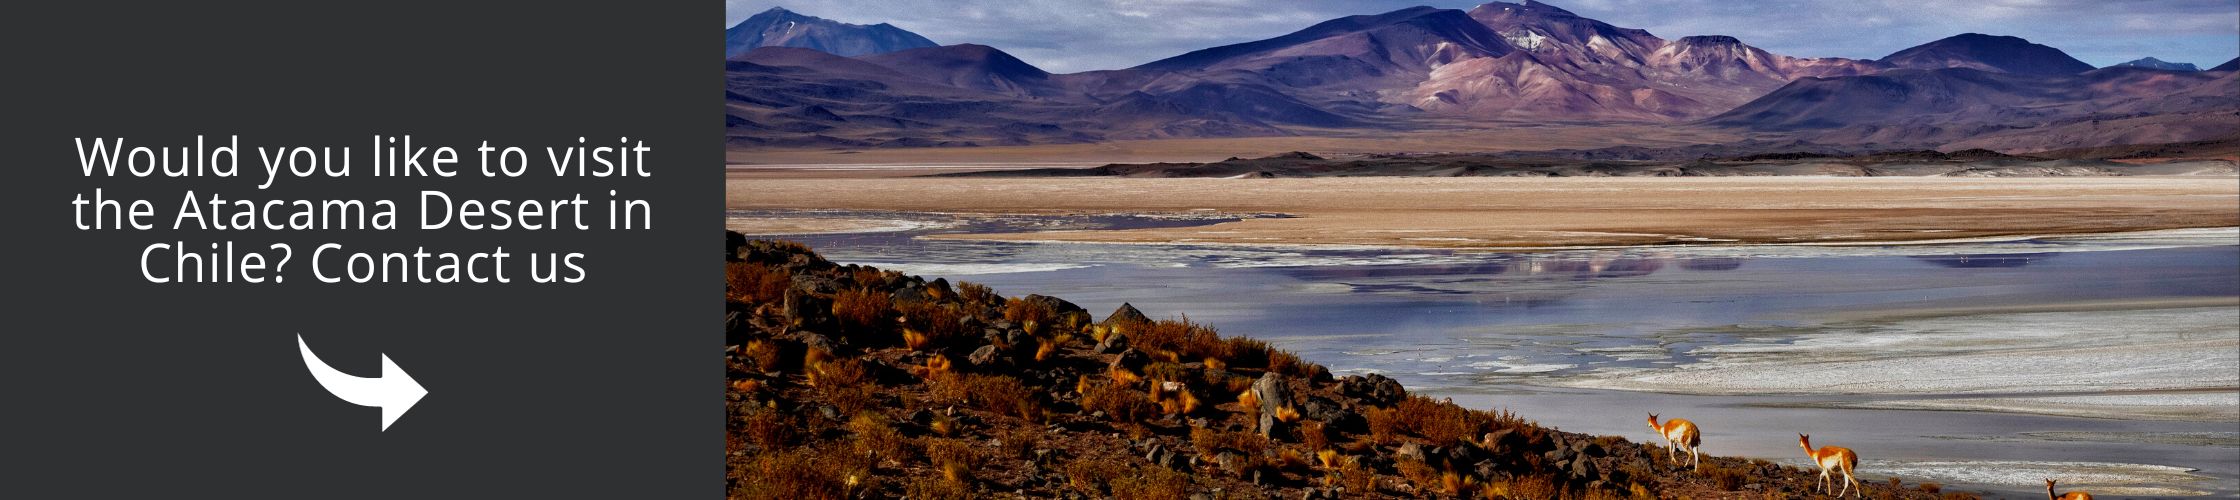 Visit the Atacama Desert with us